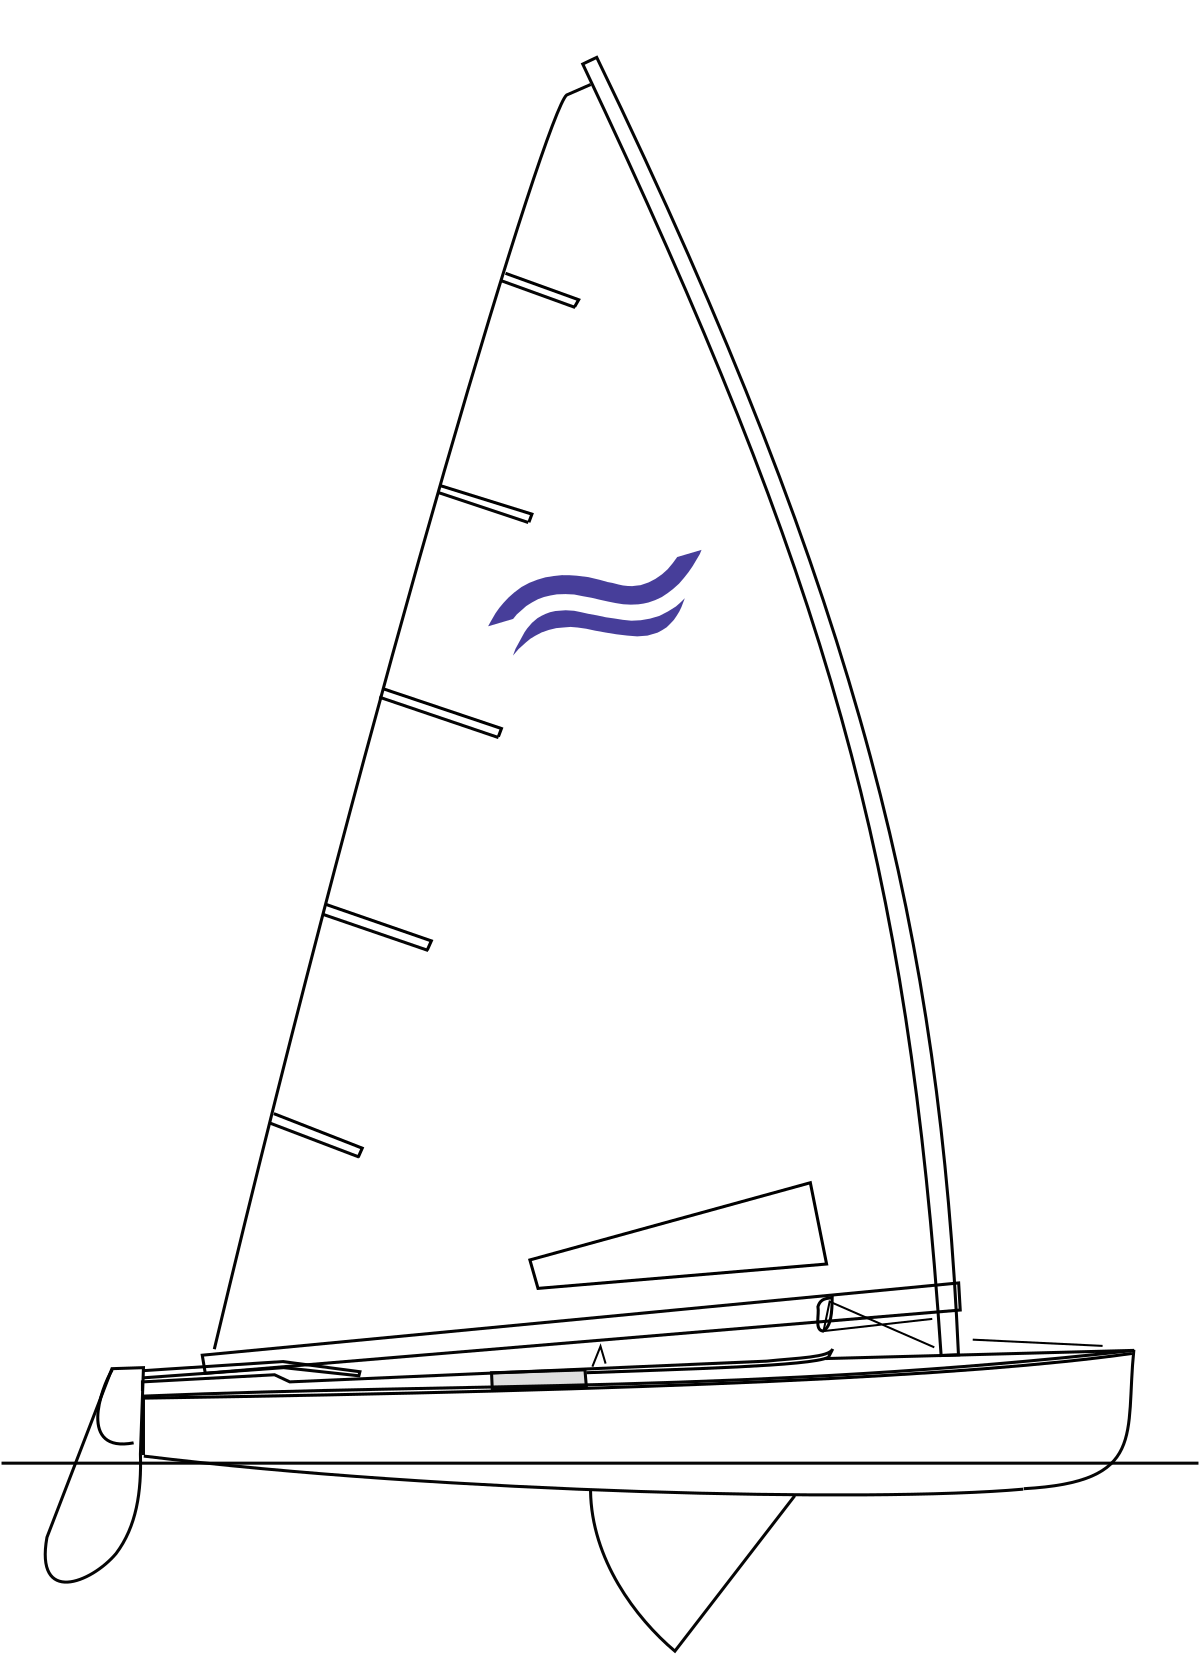 finn dinghy - wikipedia